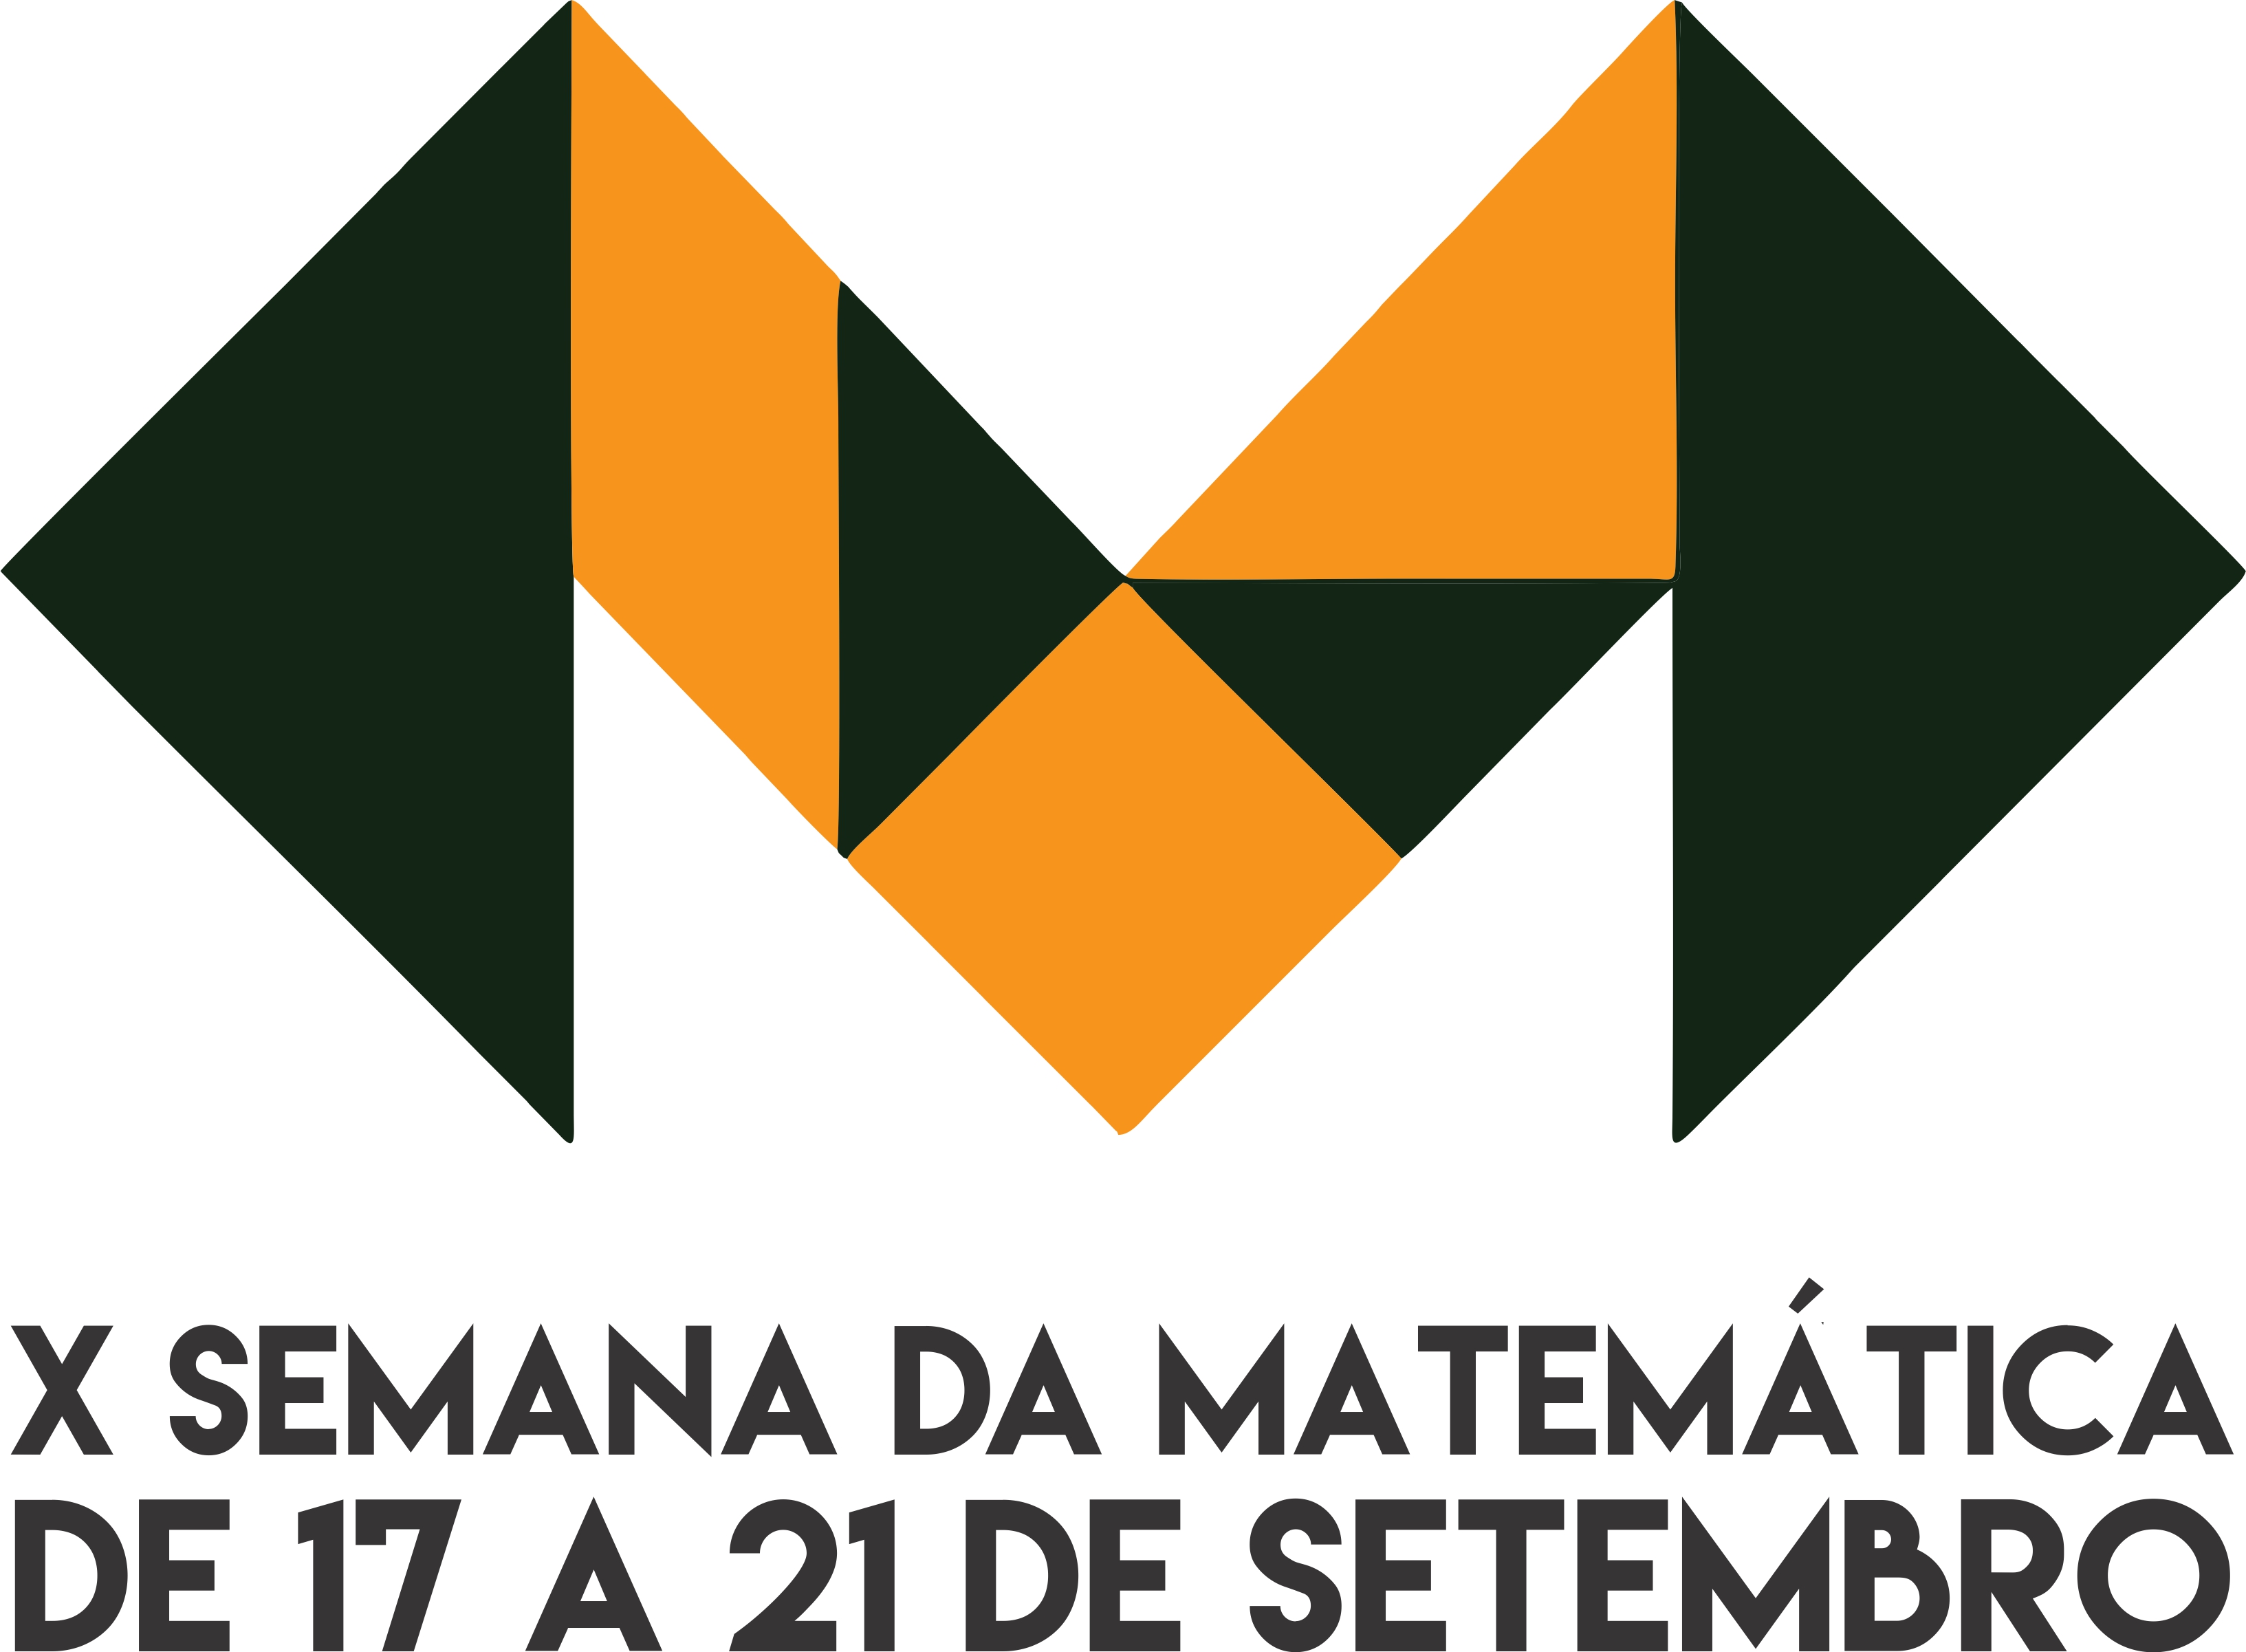 X Semana da Matemática - 17 a 21 de setembro de 2018